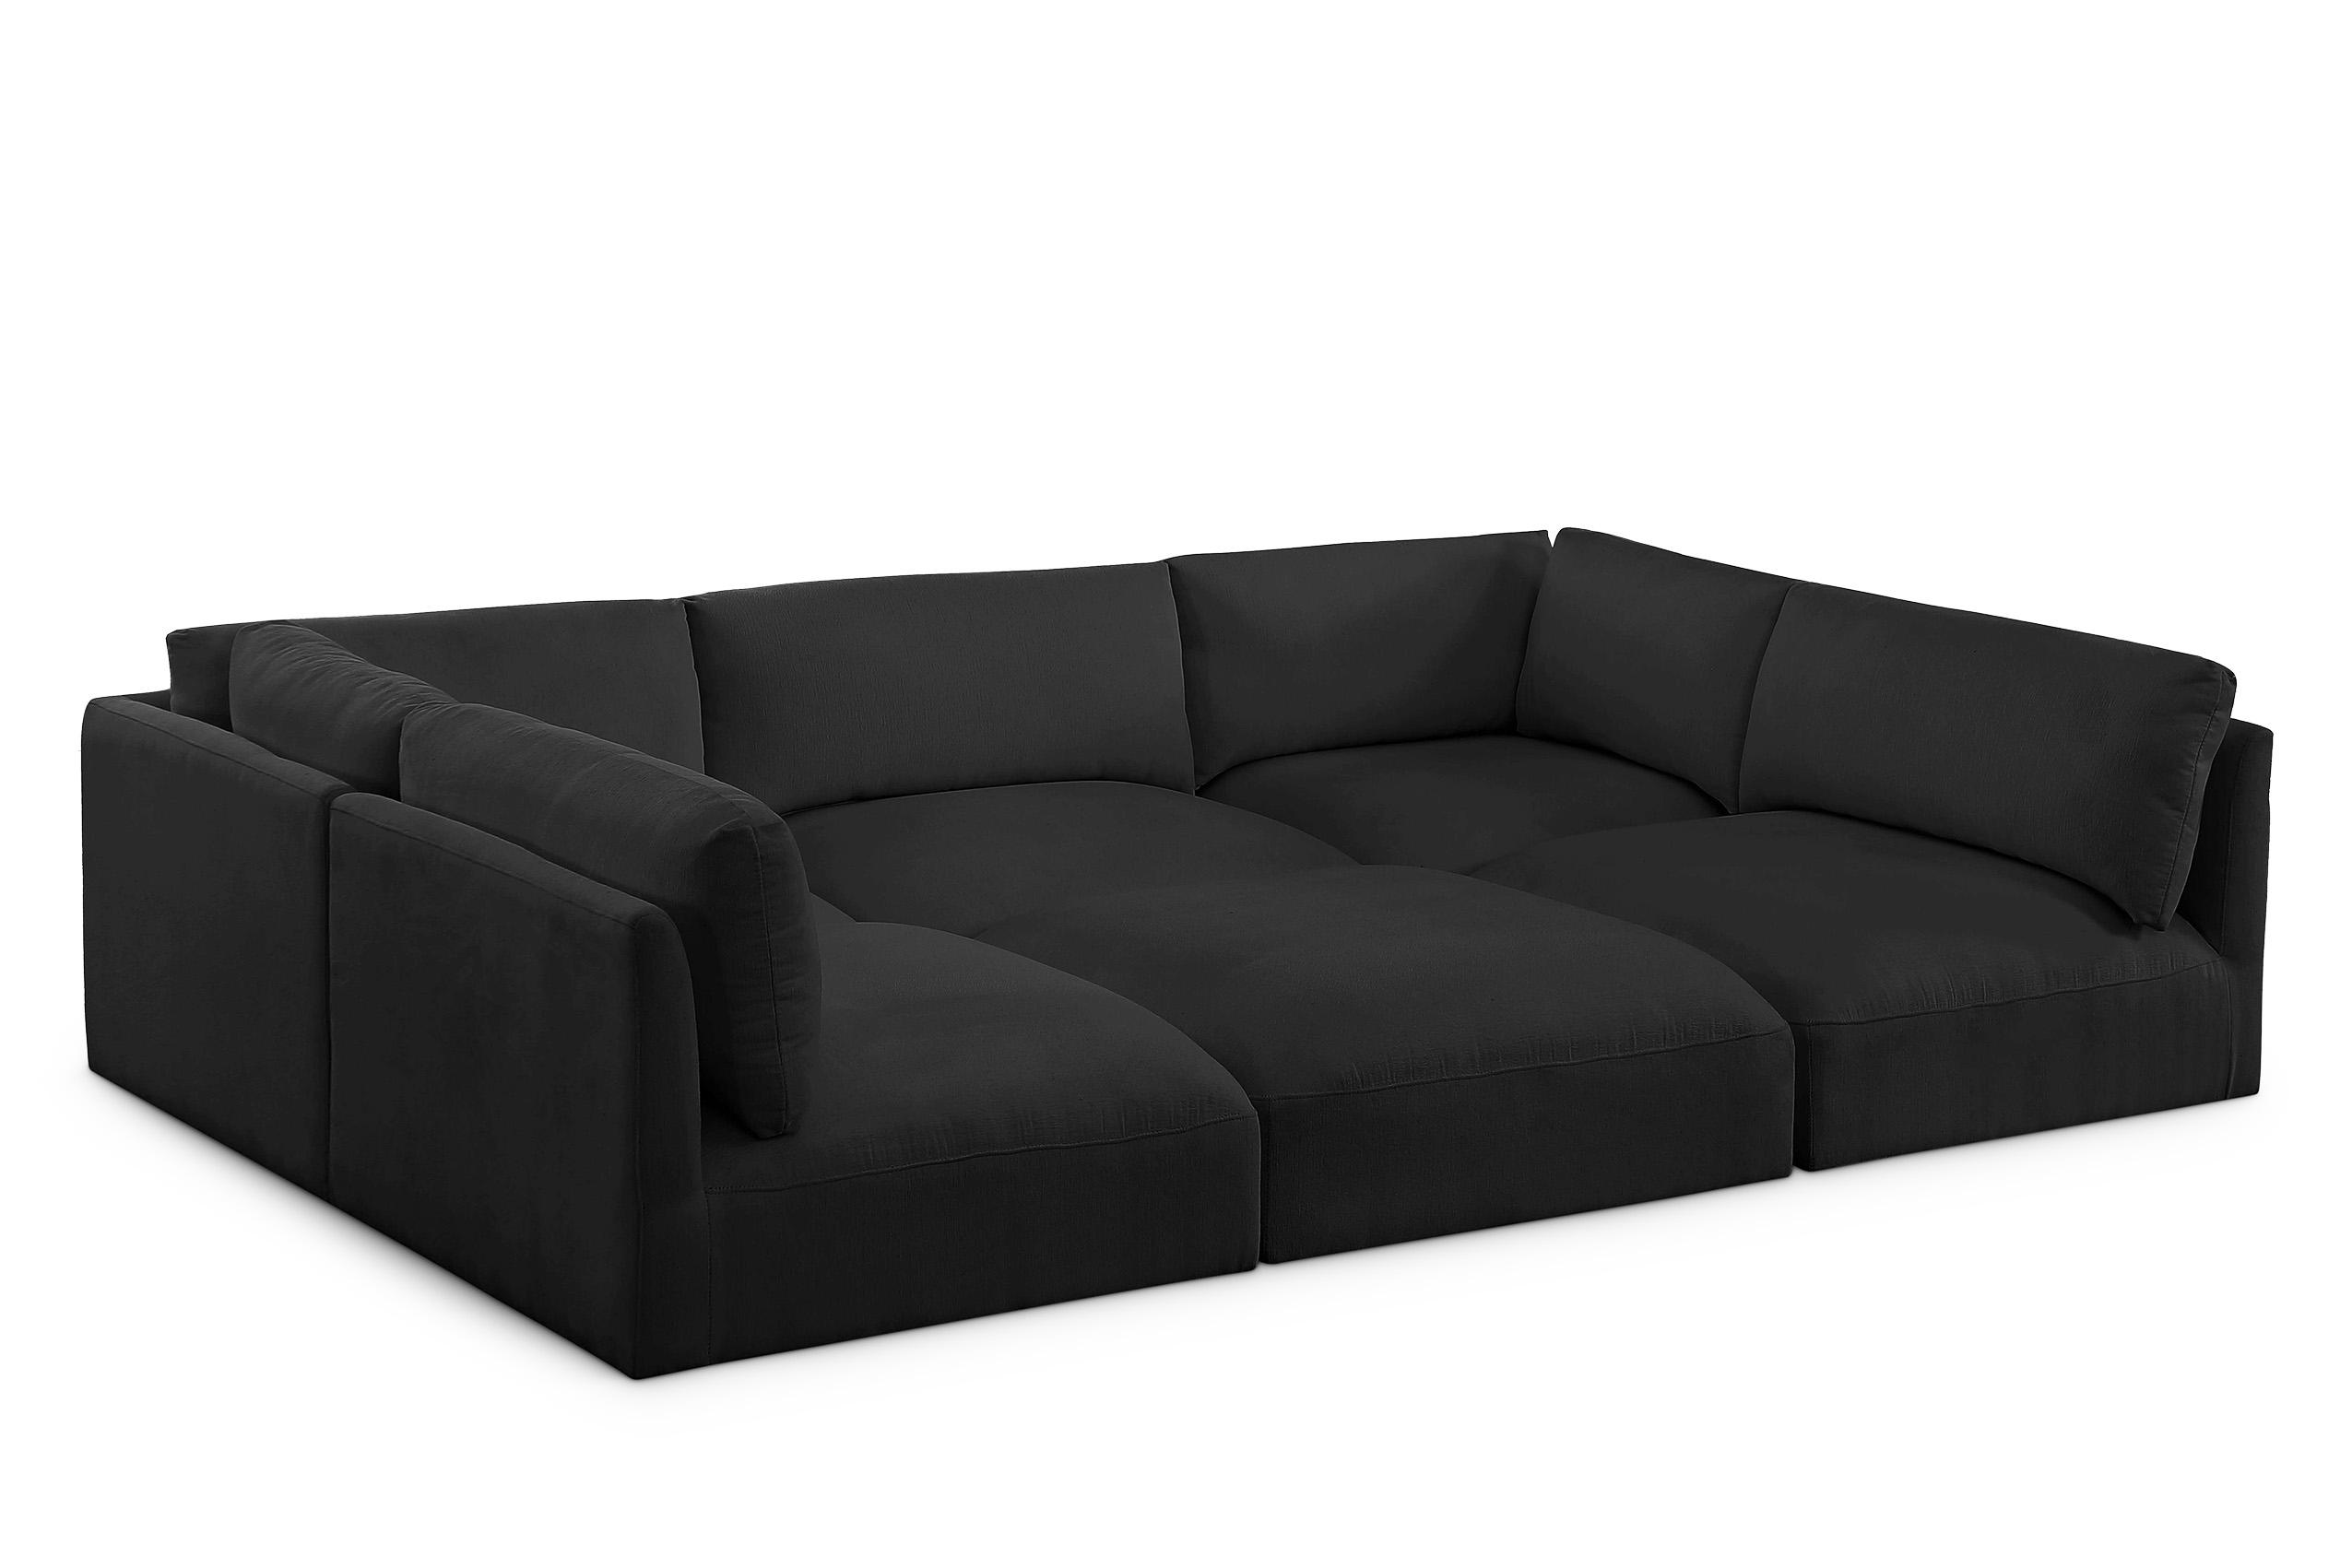 Contemporary, Modern Modular Sectional Sofa EASE 696Black-Sec6B 696Black-Sec6B in Black Fabric